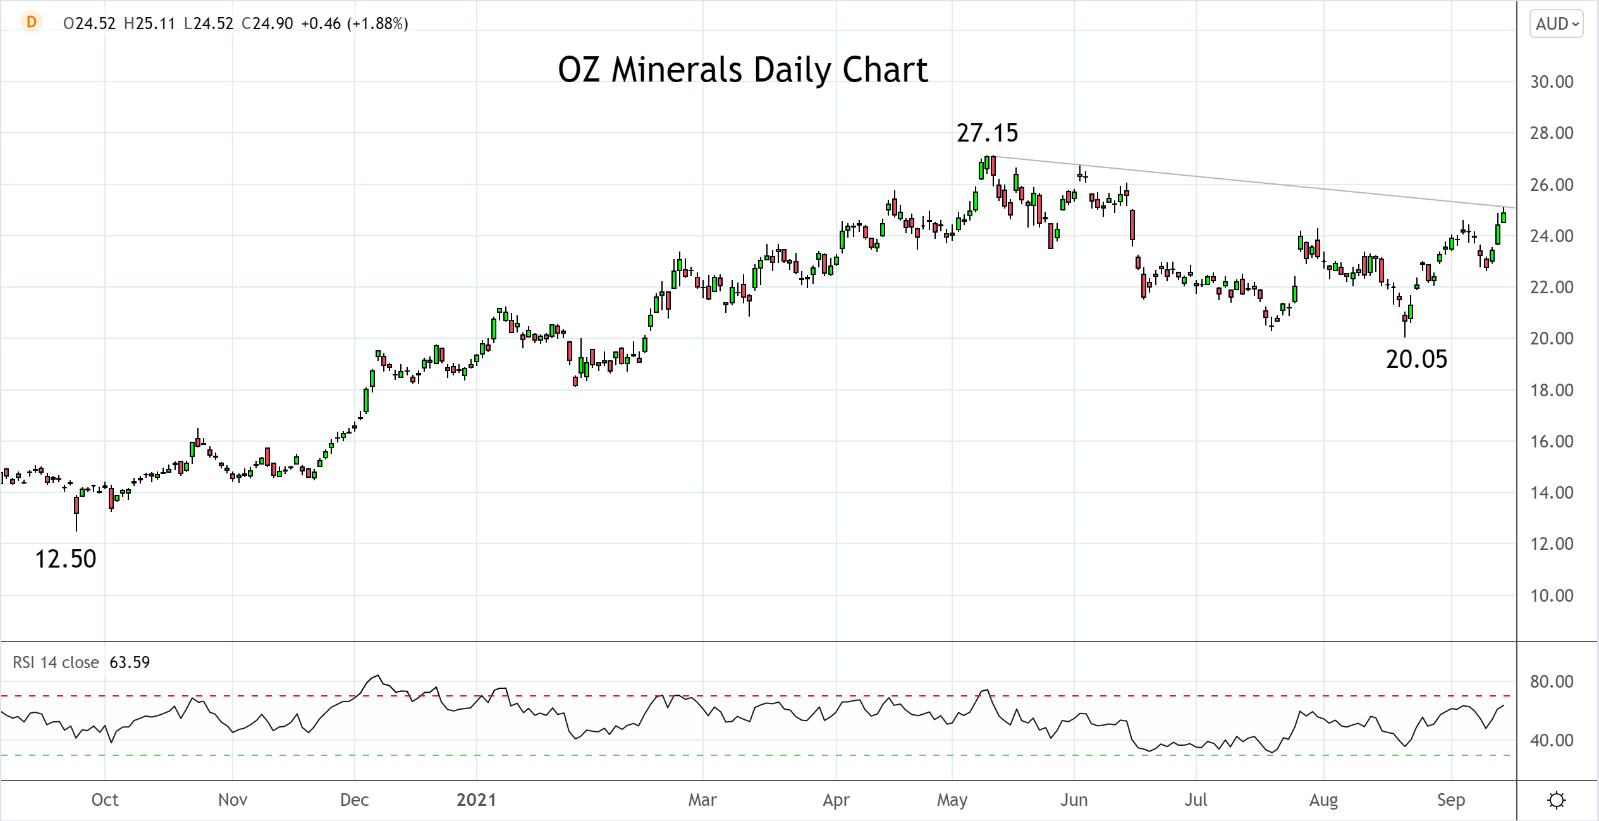 Oz Minerals Daily Chart